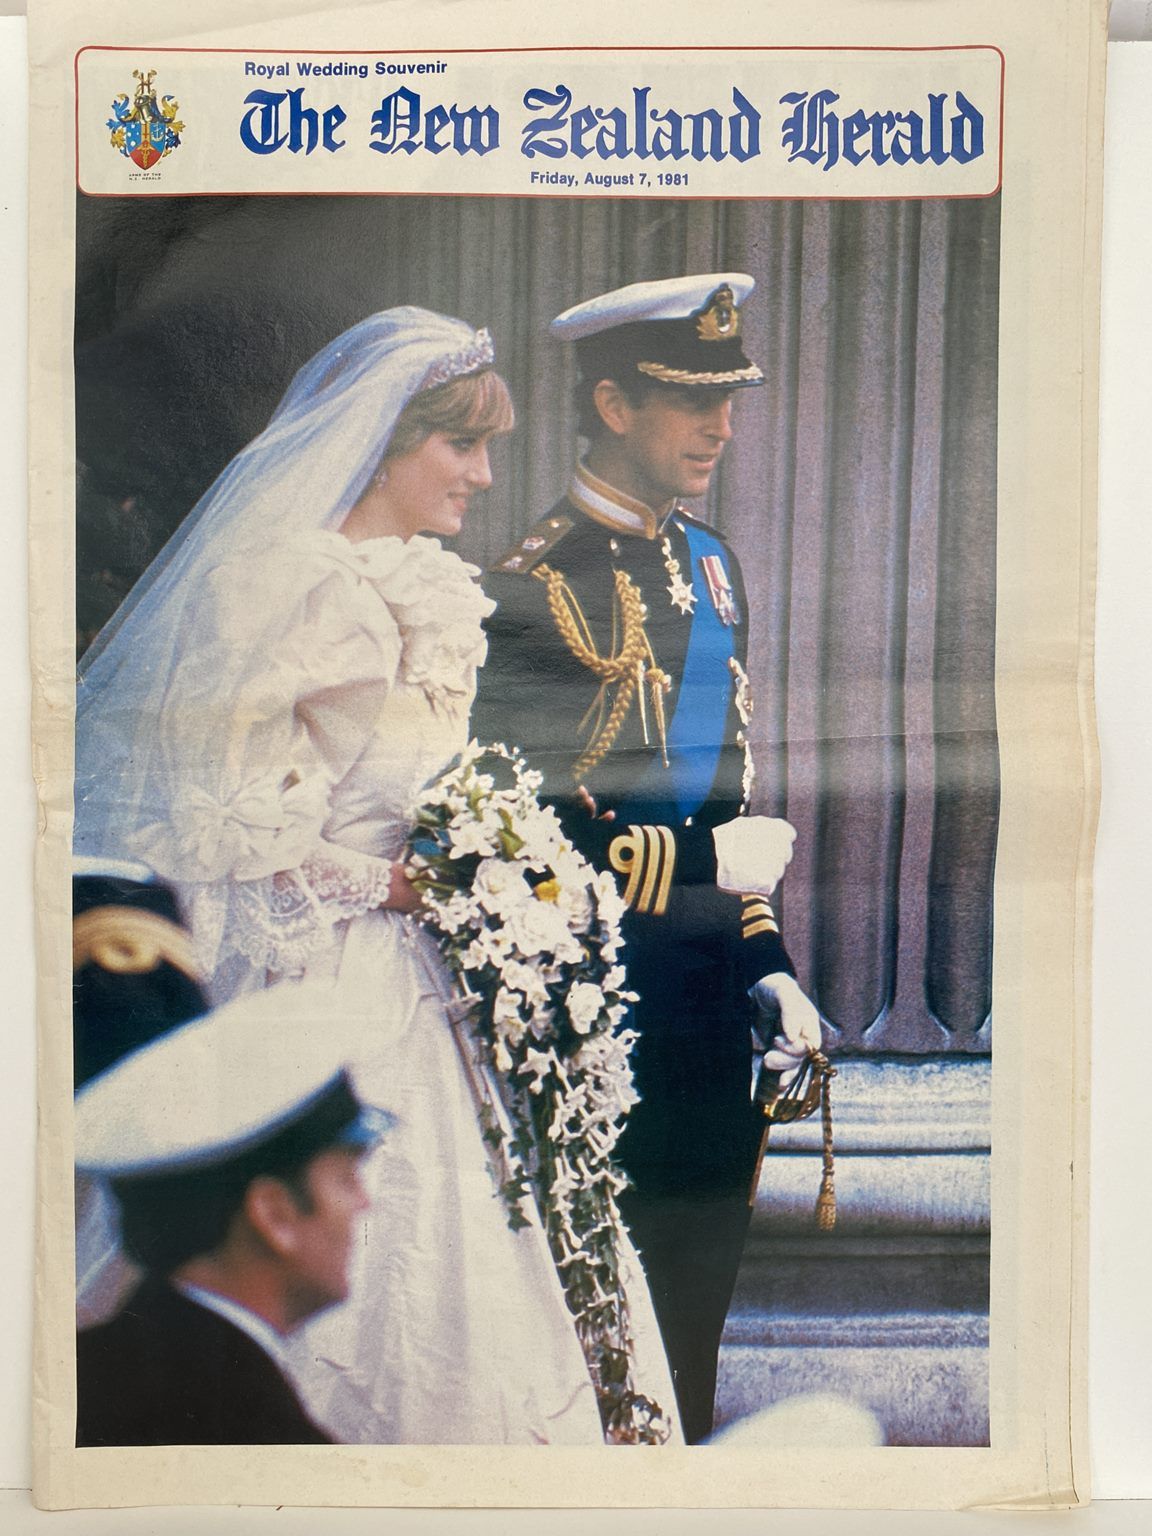 OLD NEWSPAPER: The New Zealand Herald, 7 August 1981 - Royal Wedding Souvenir